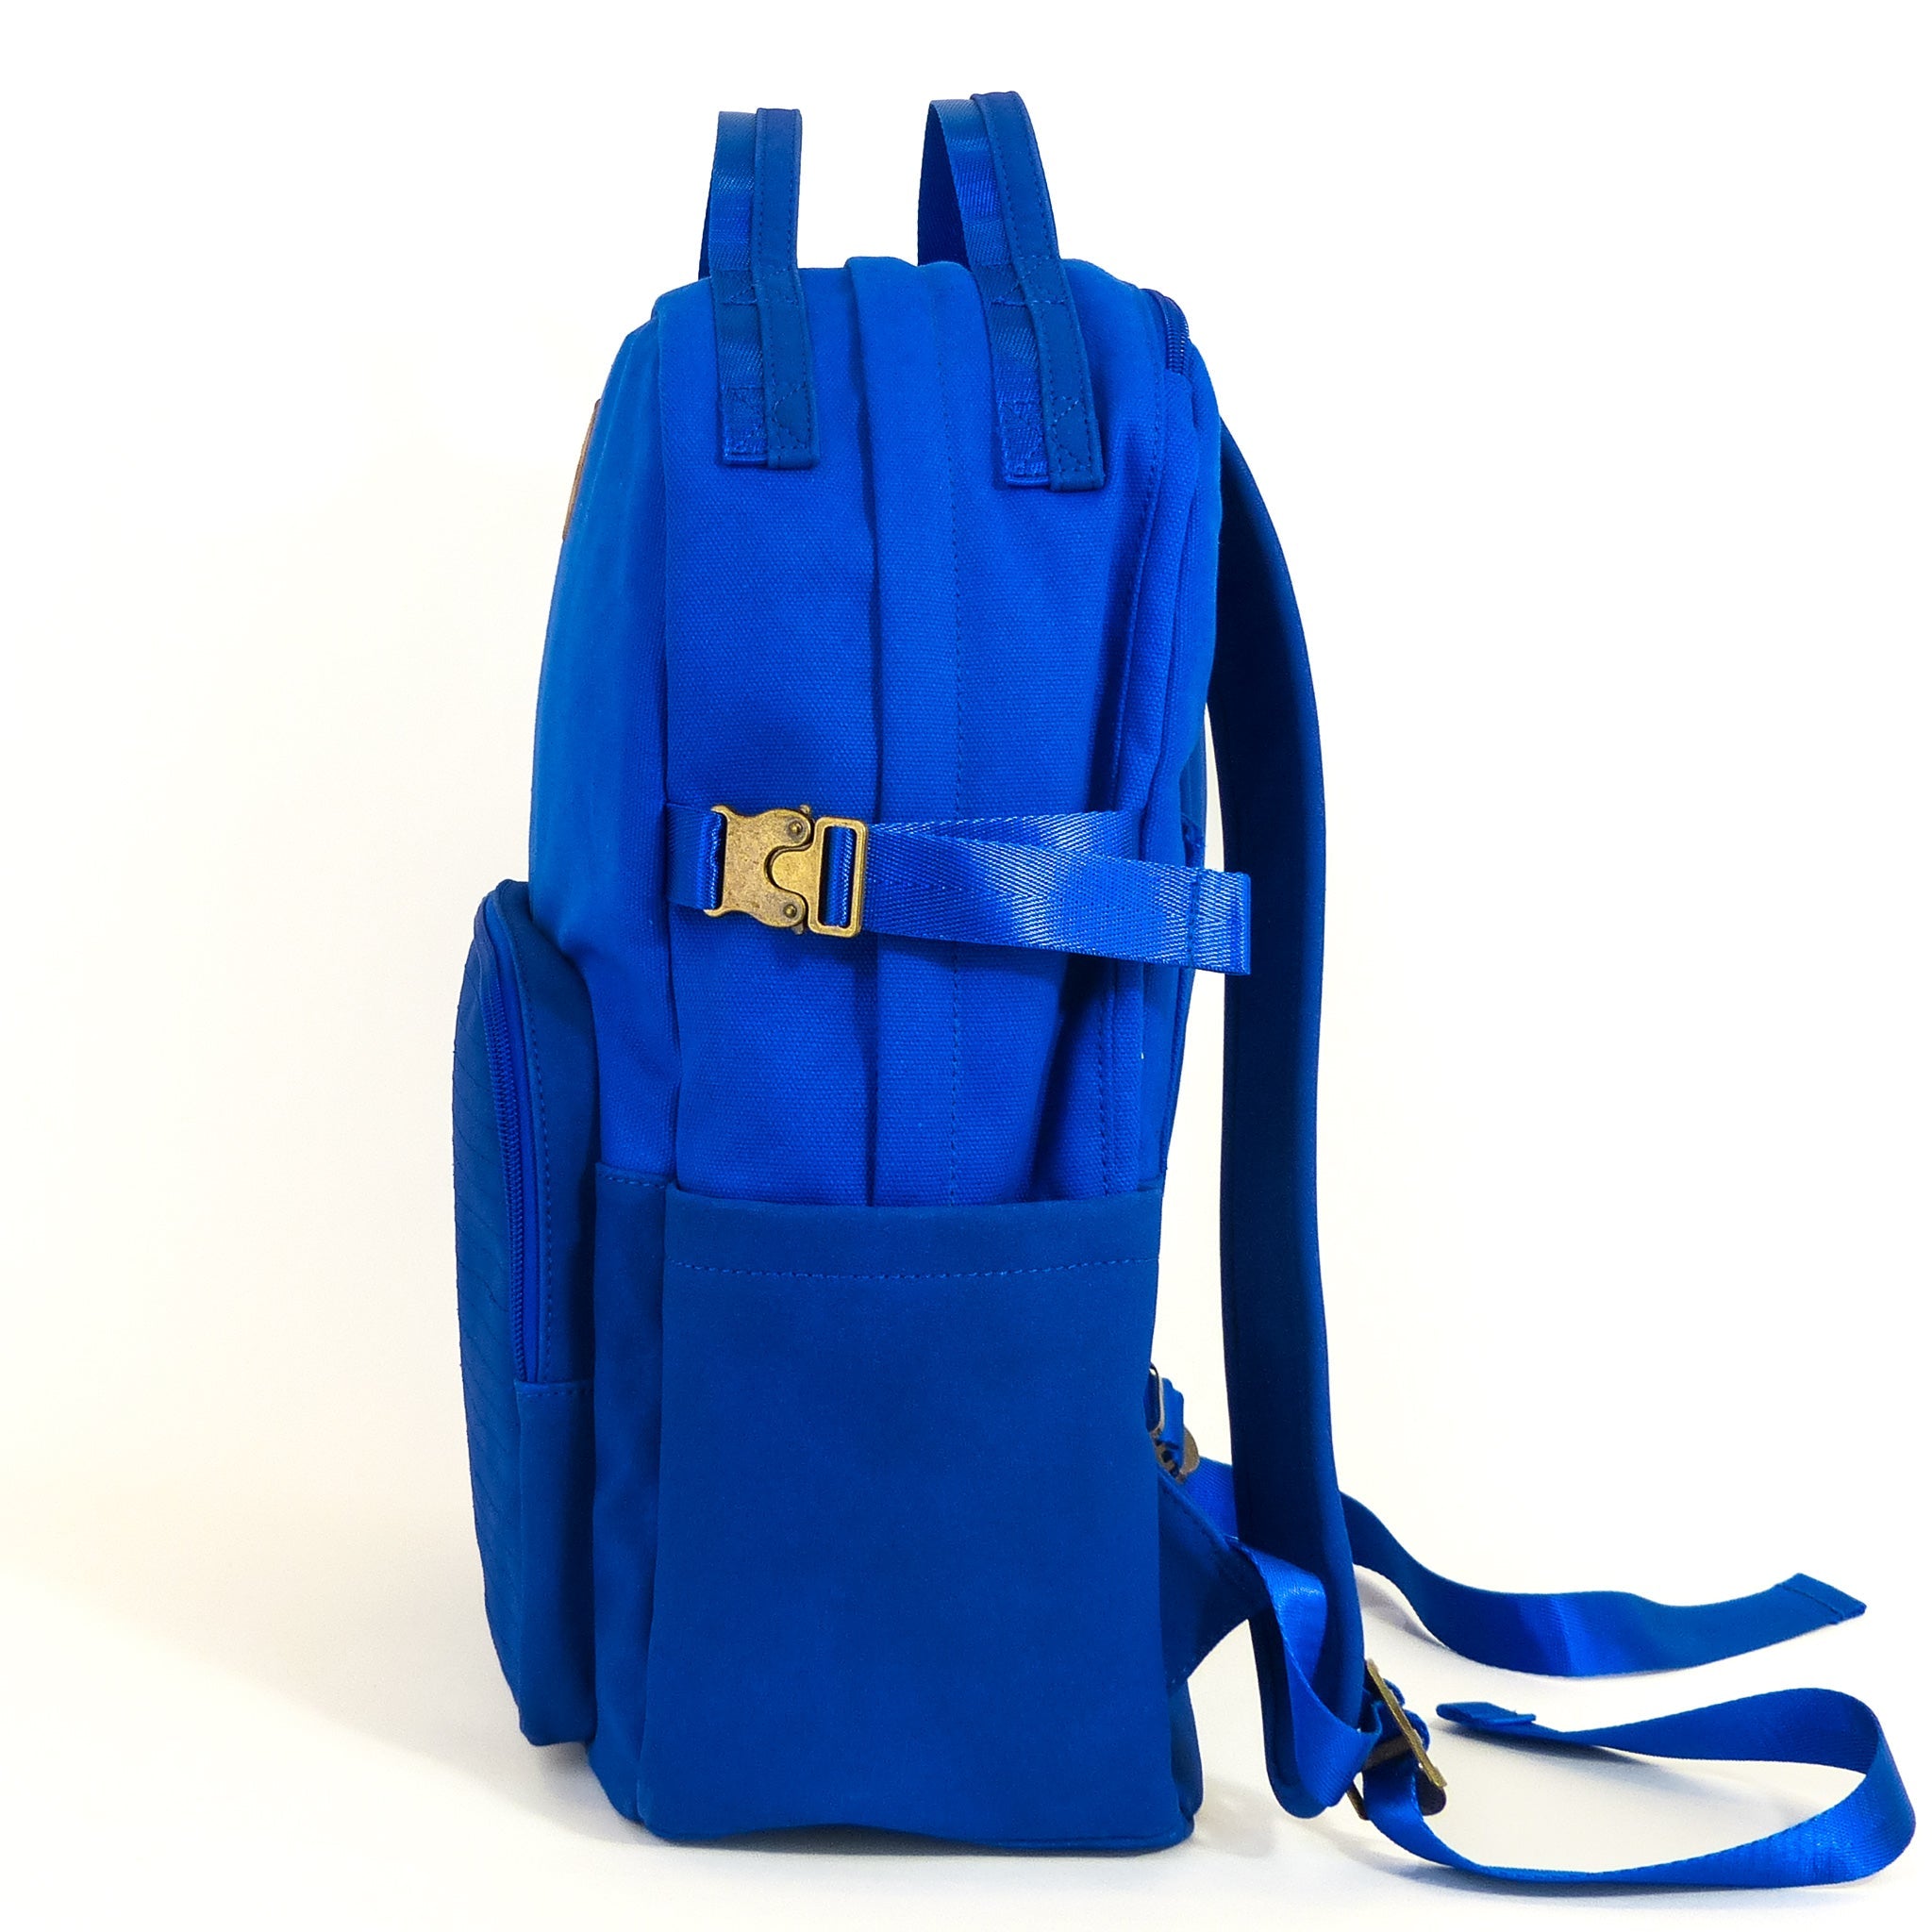 Good To Go Backpack - Eternal Optimist Cobalt Blue by FourFour Co